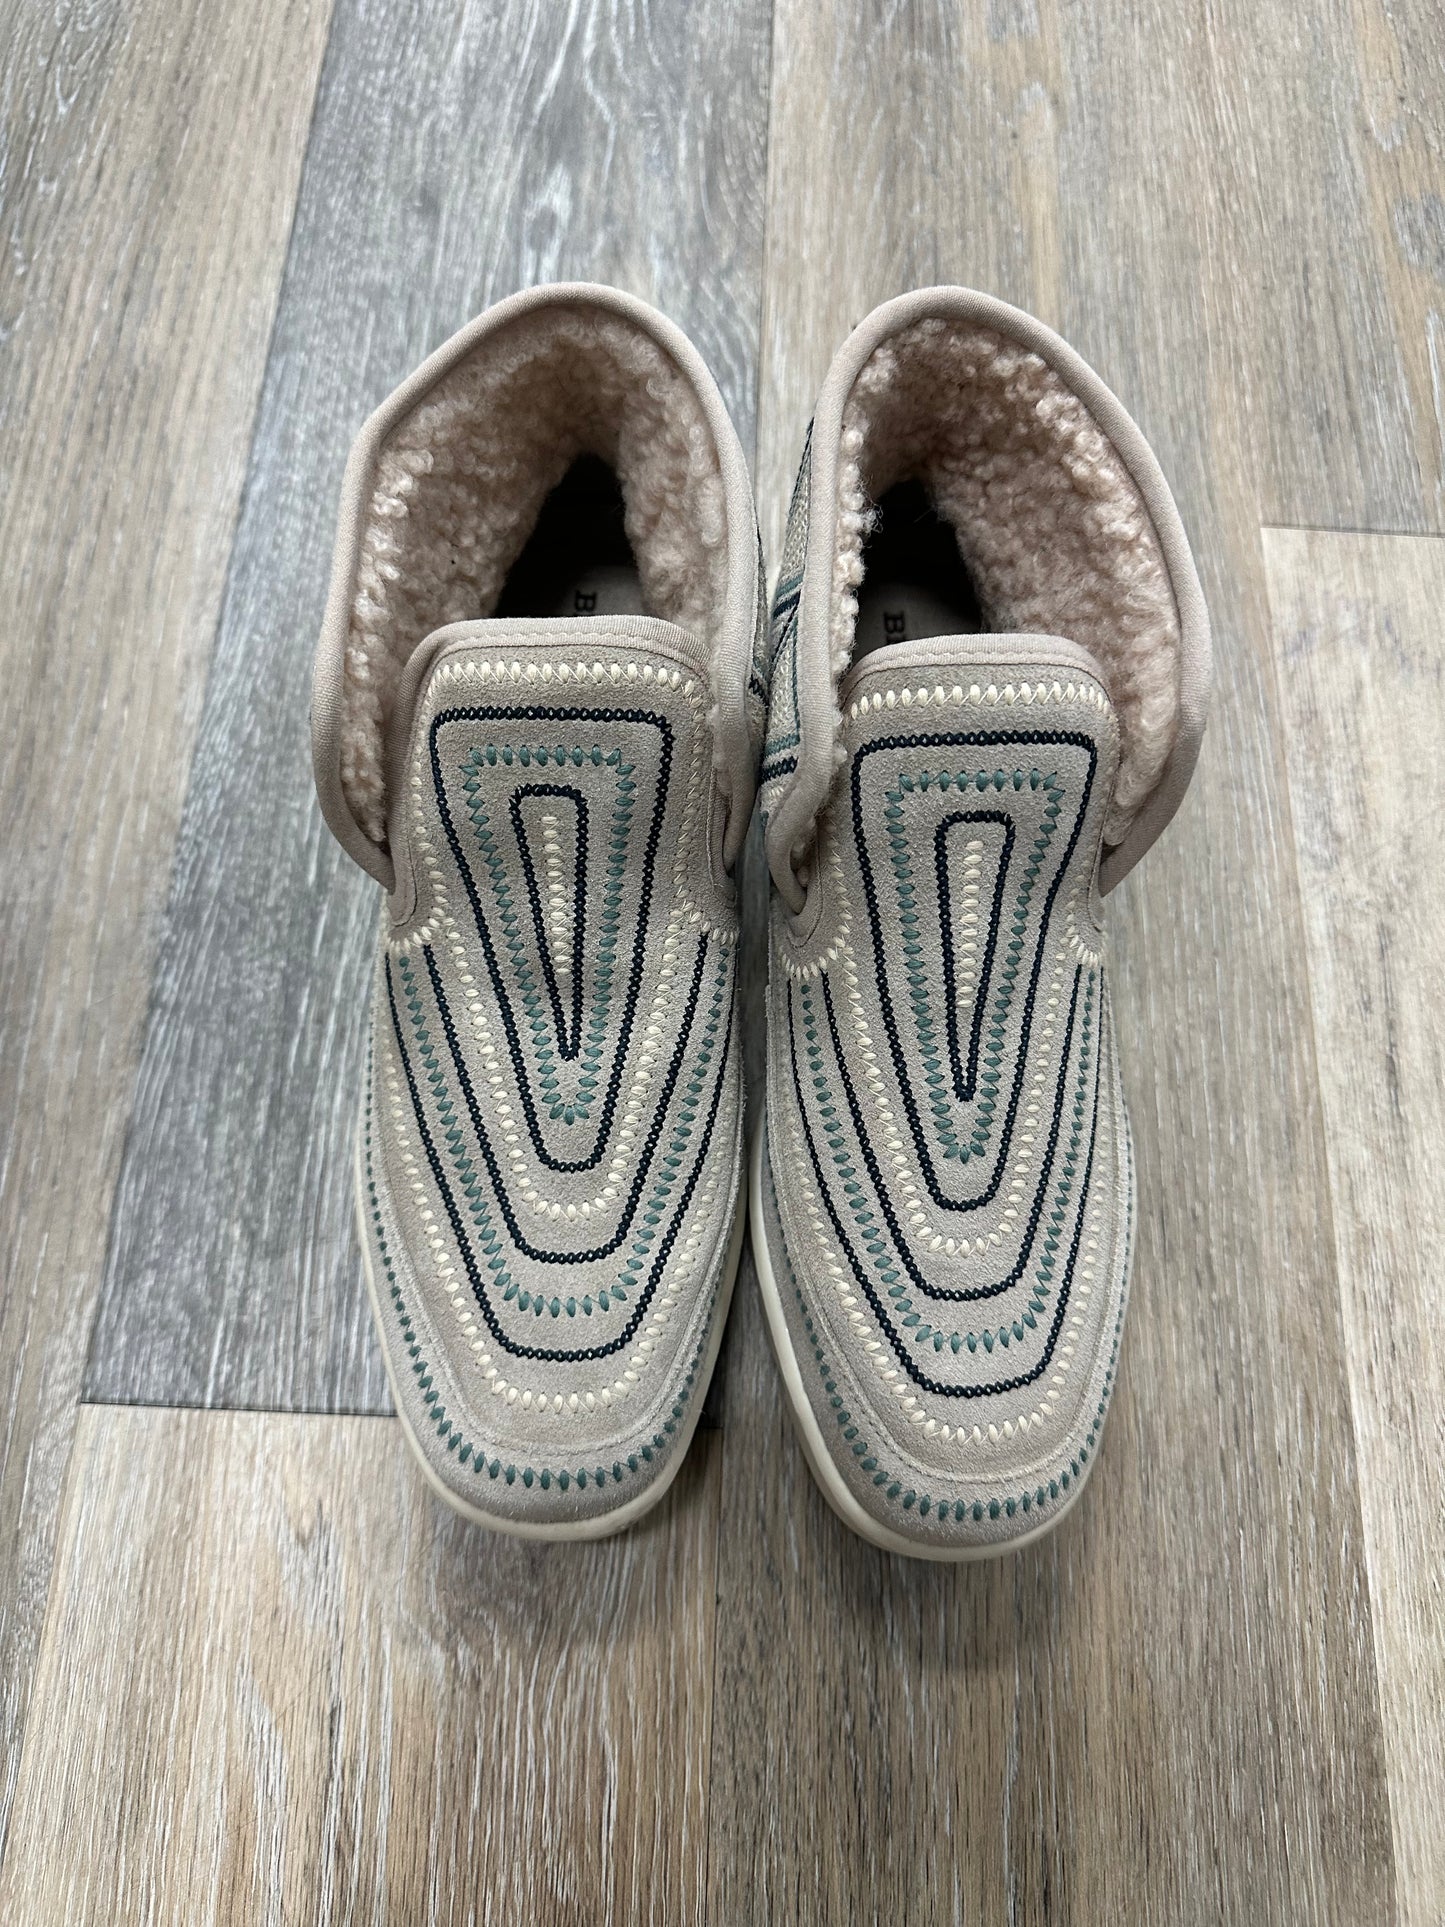 Boots Ankle Flats By Bernardo  Size: 6